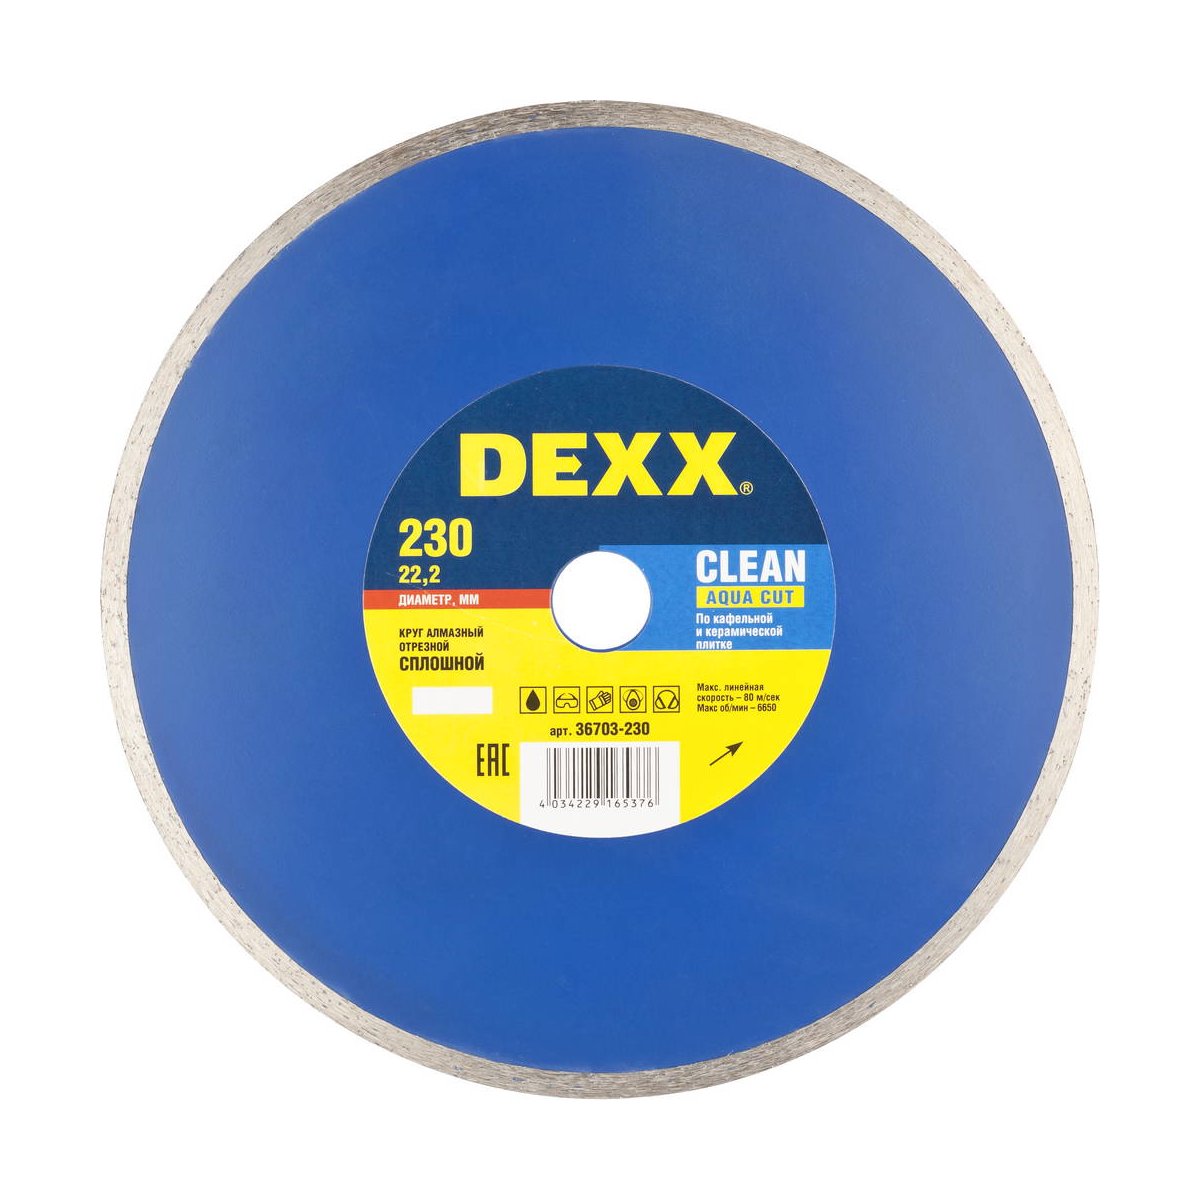 DEXX CLEAN AQUA CUT 230 ,          (23022.2 , 52.3 ), 36695-230 (36703-230)